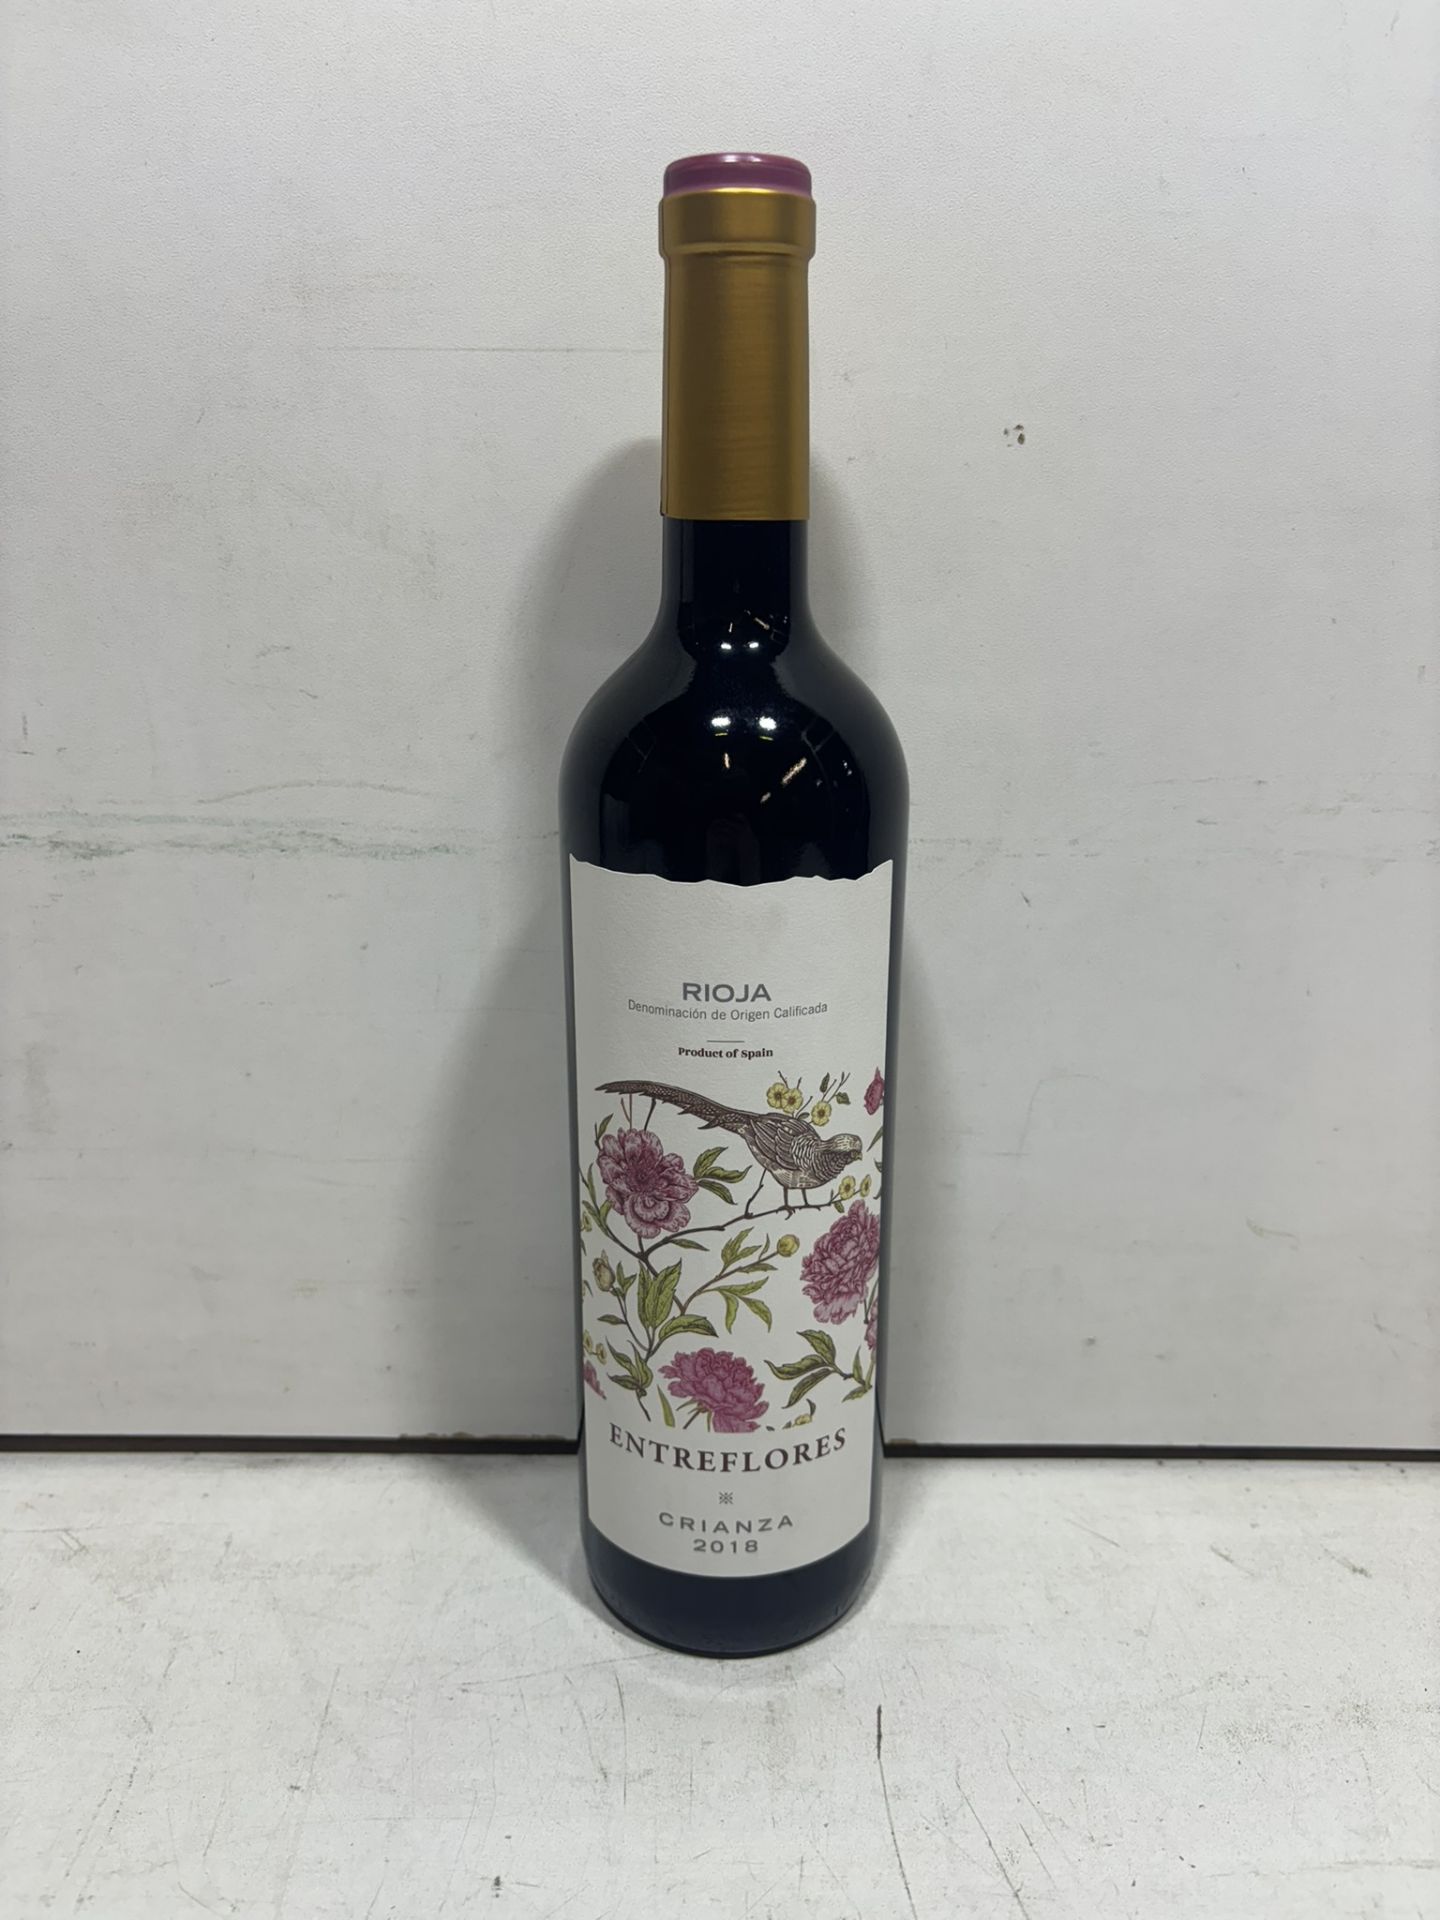 10 X Bottles Of Entreflores Rioja Crianza 2018 75Cl Tempranillo Intense Red Wine